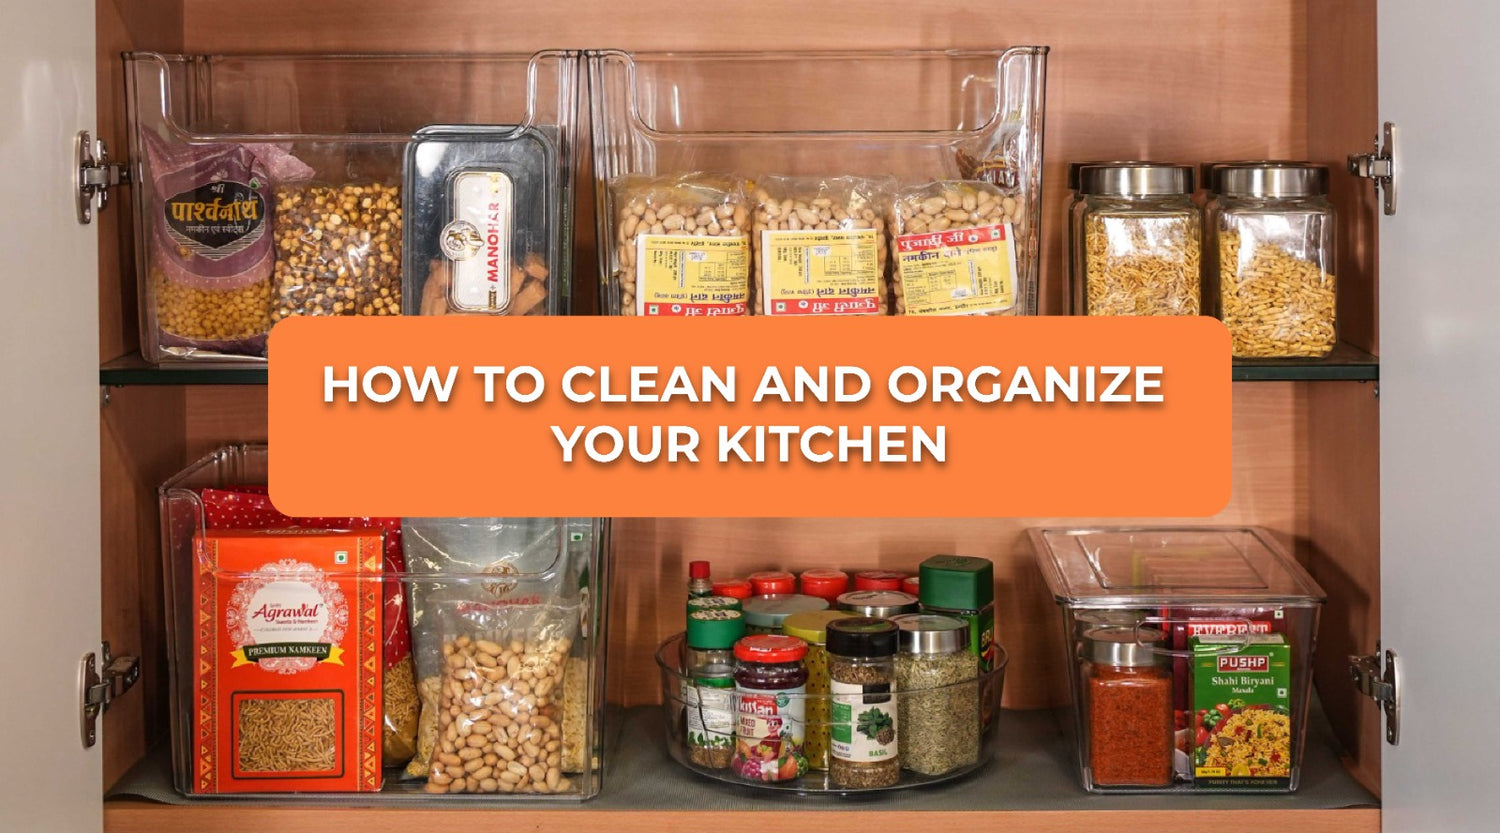 10 Spice Storage Ideas to Keep Your Kitchen Tidy